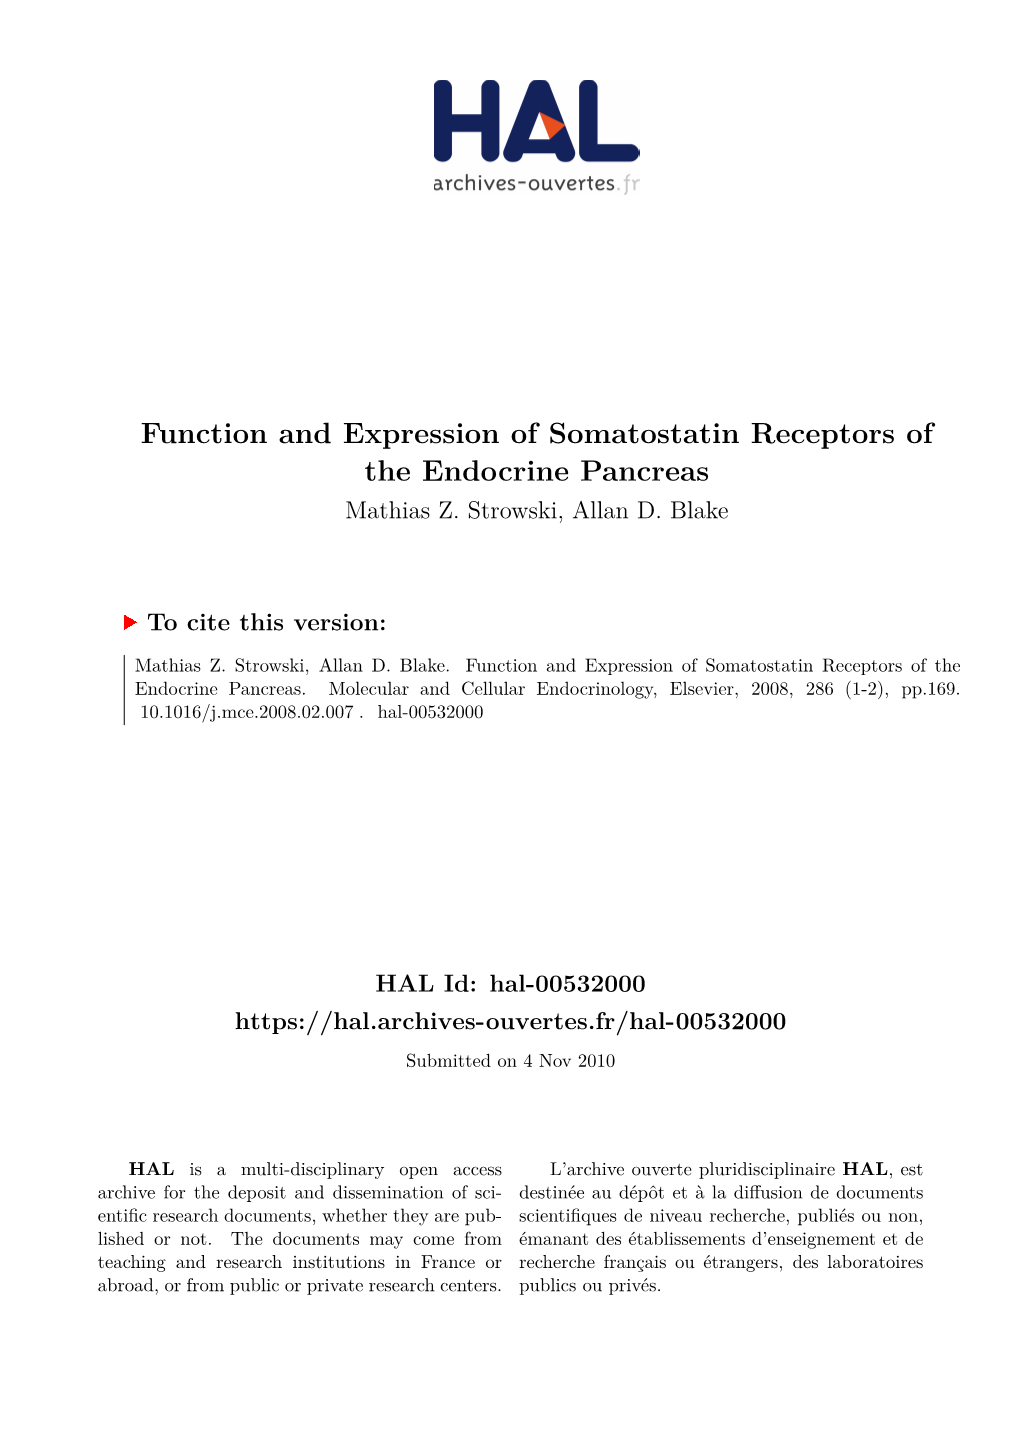 Function and Expression of Somatostatin Receptors of the Endocrine Pancreas Mathias Z